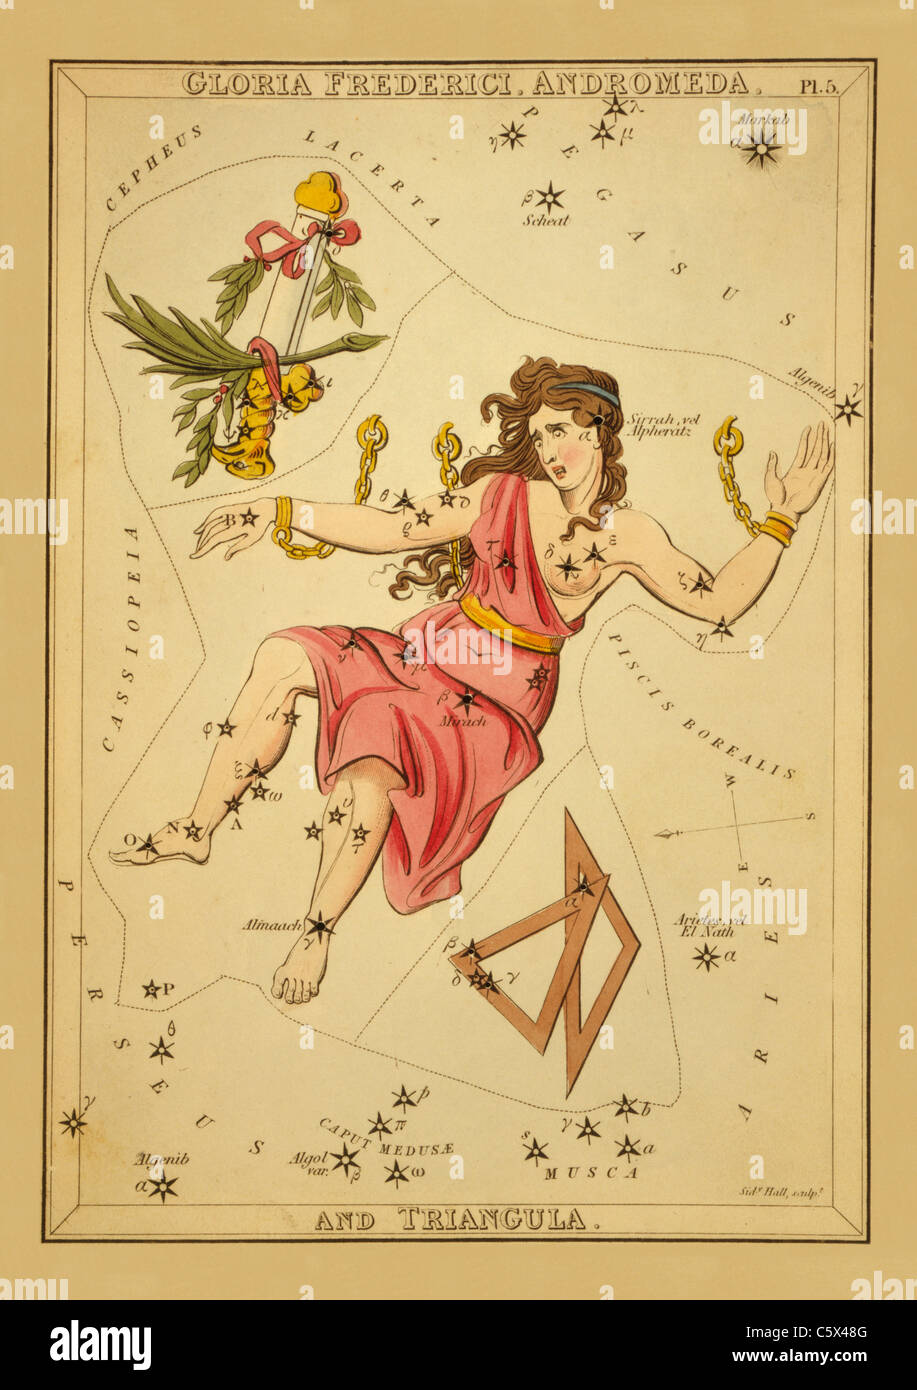 Gloria Frederici, Andromeda und Triangula - 1825 astronomische Diagramm Stockfoto